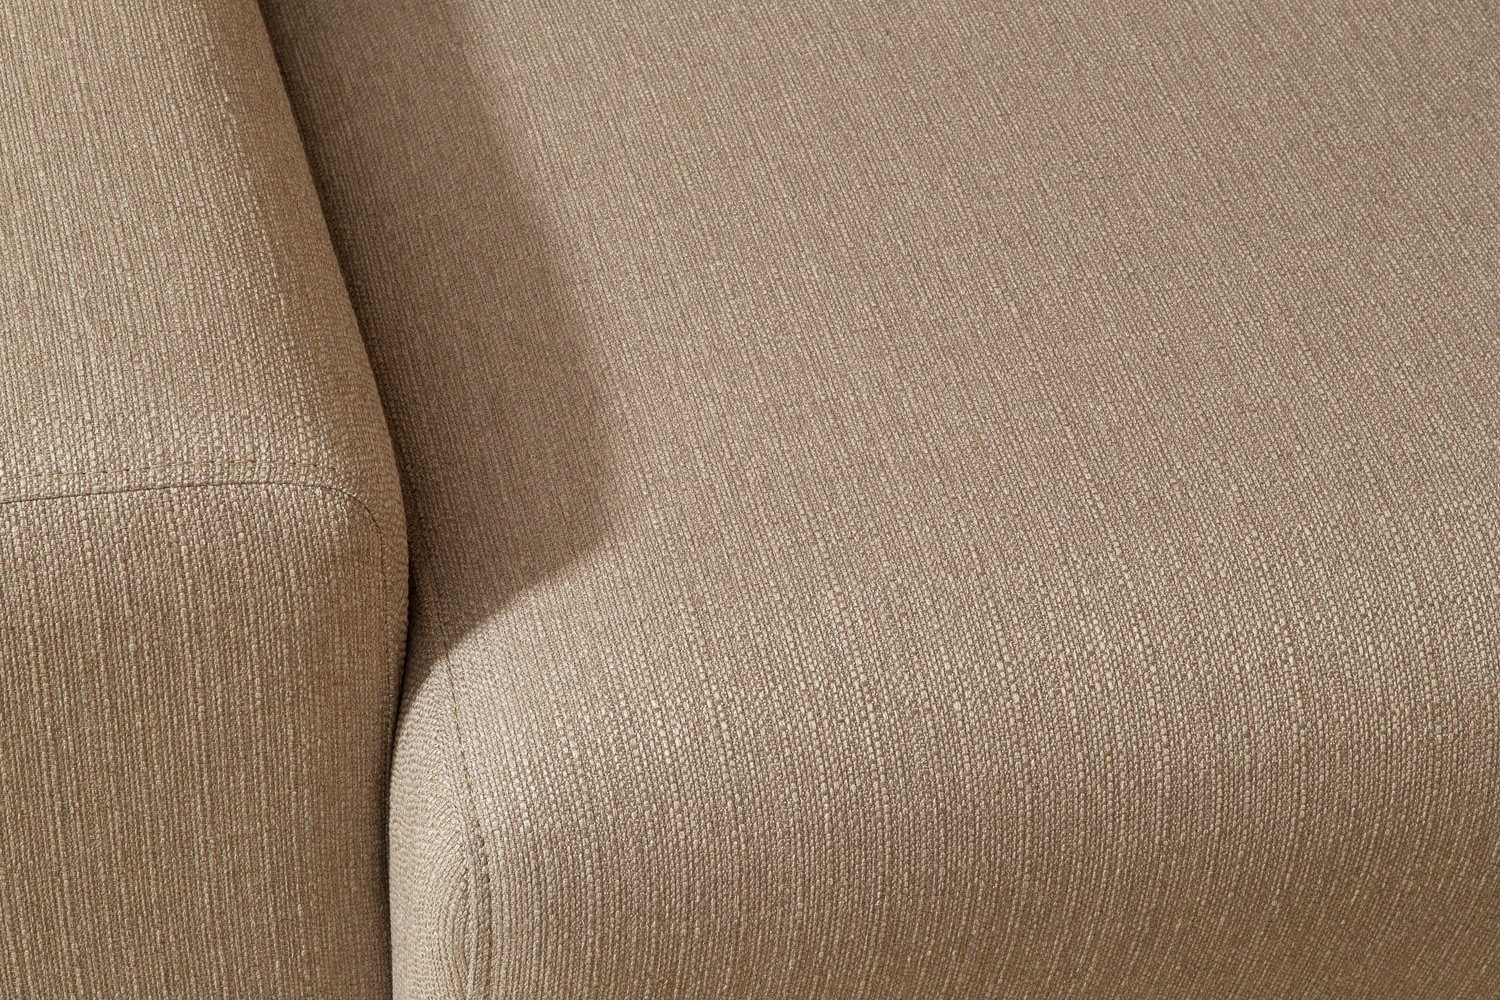 Текстура светлой ткани для дивана